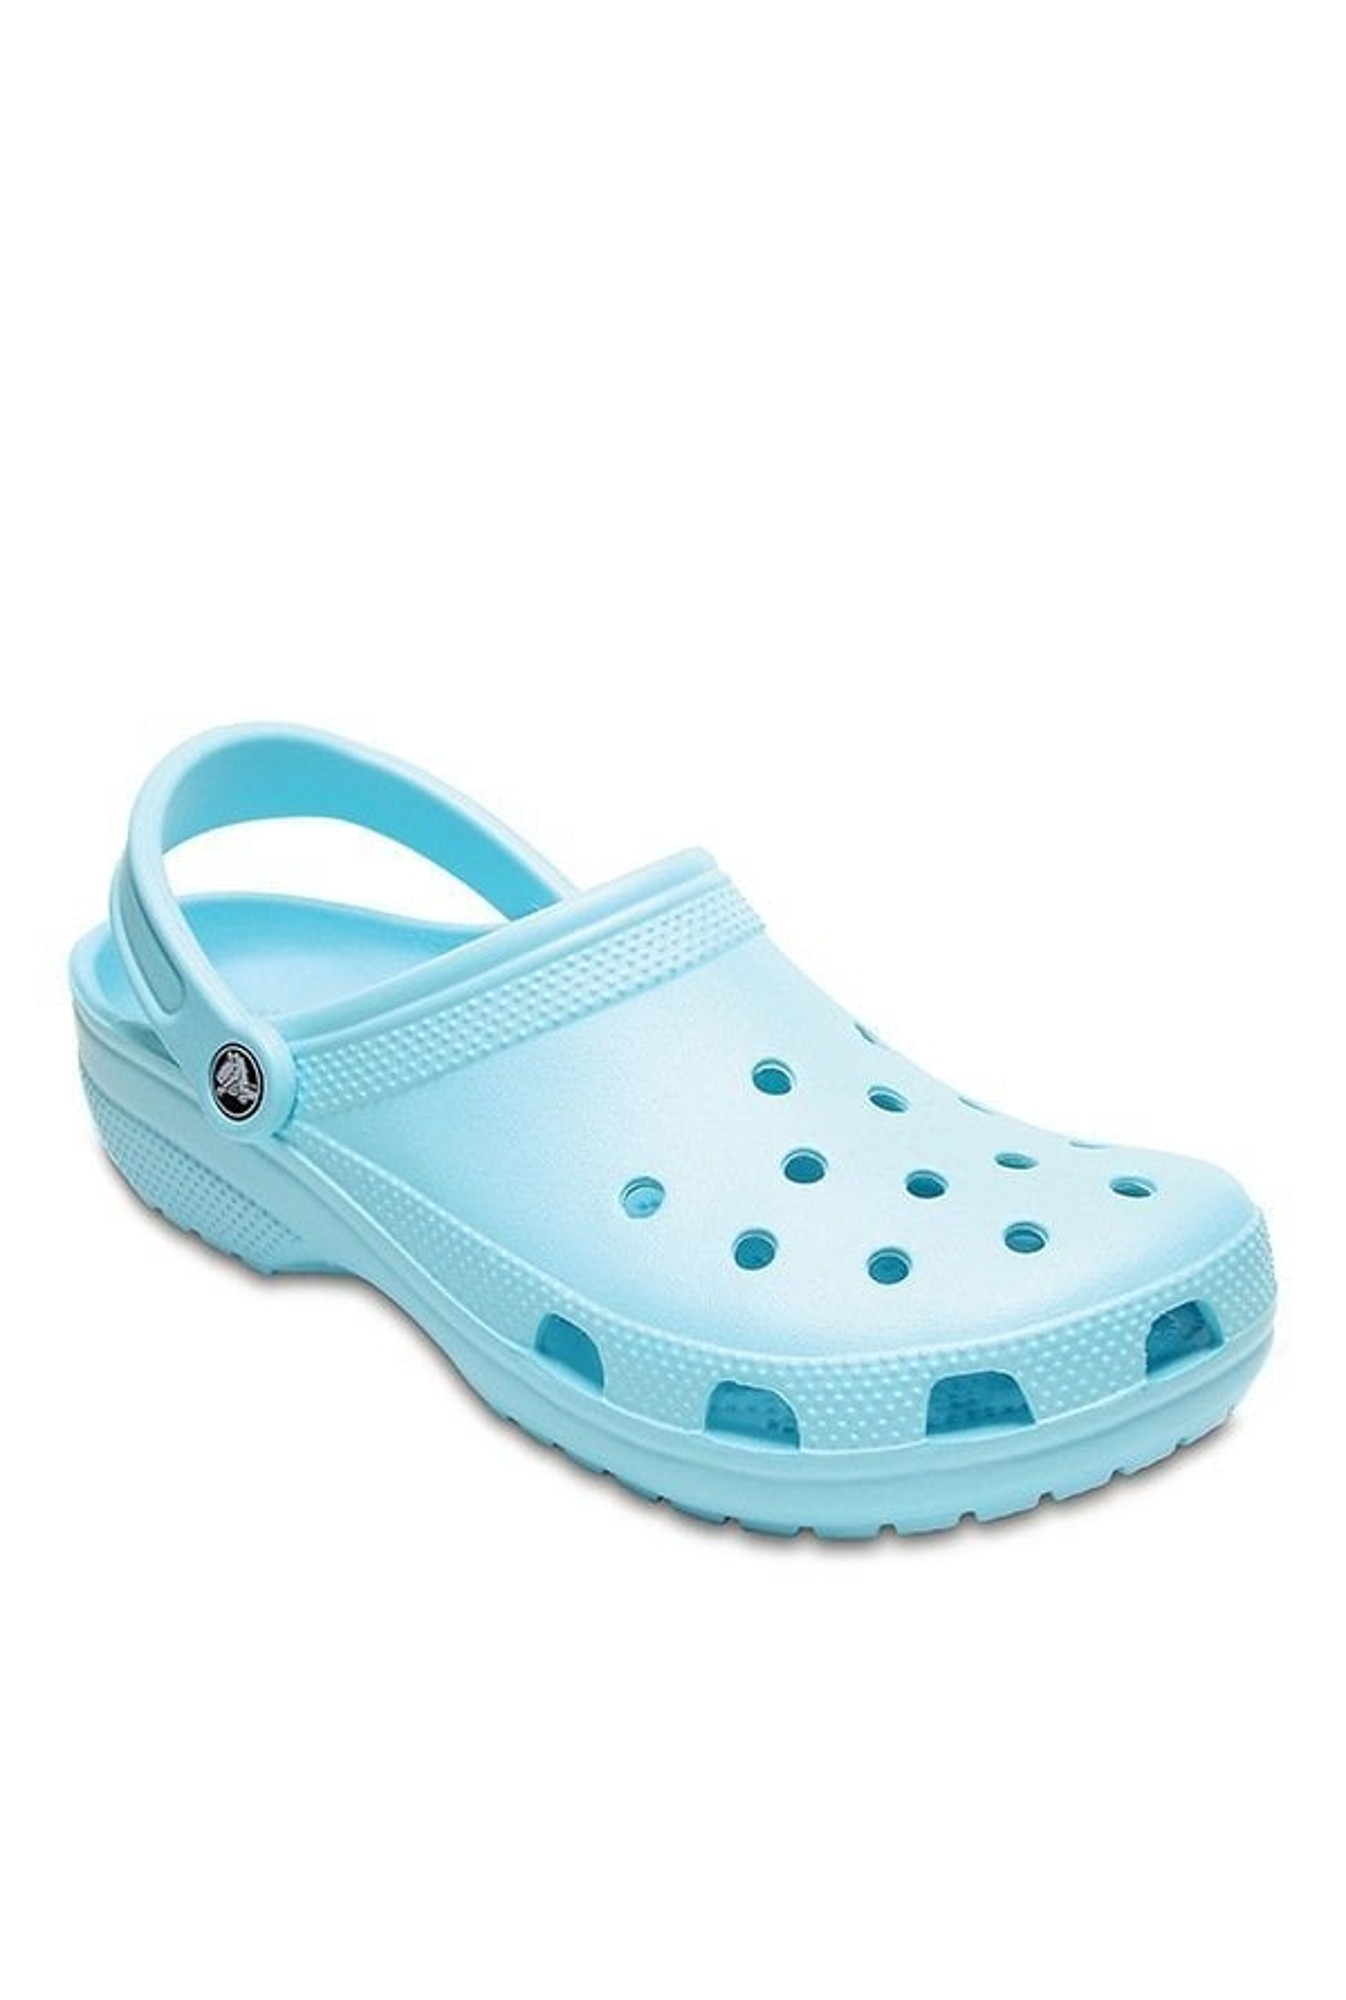 blue baby crocs